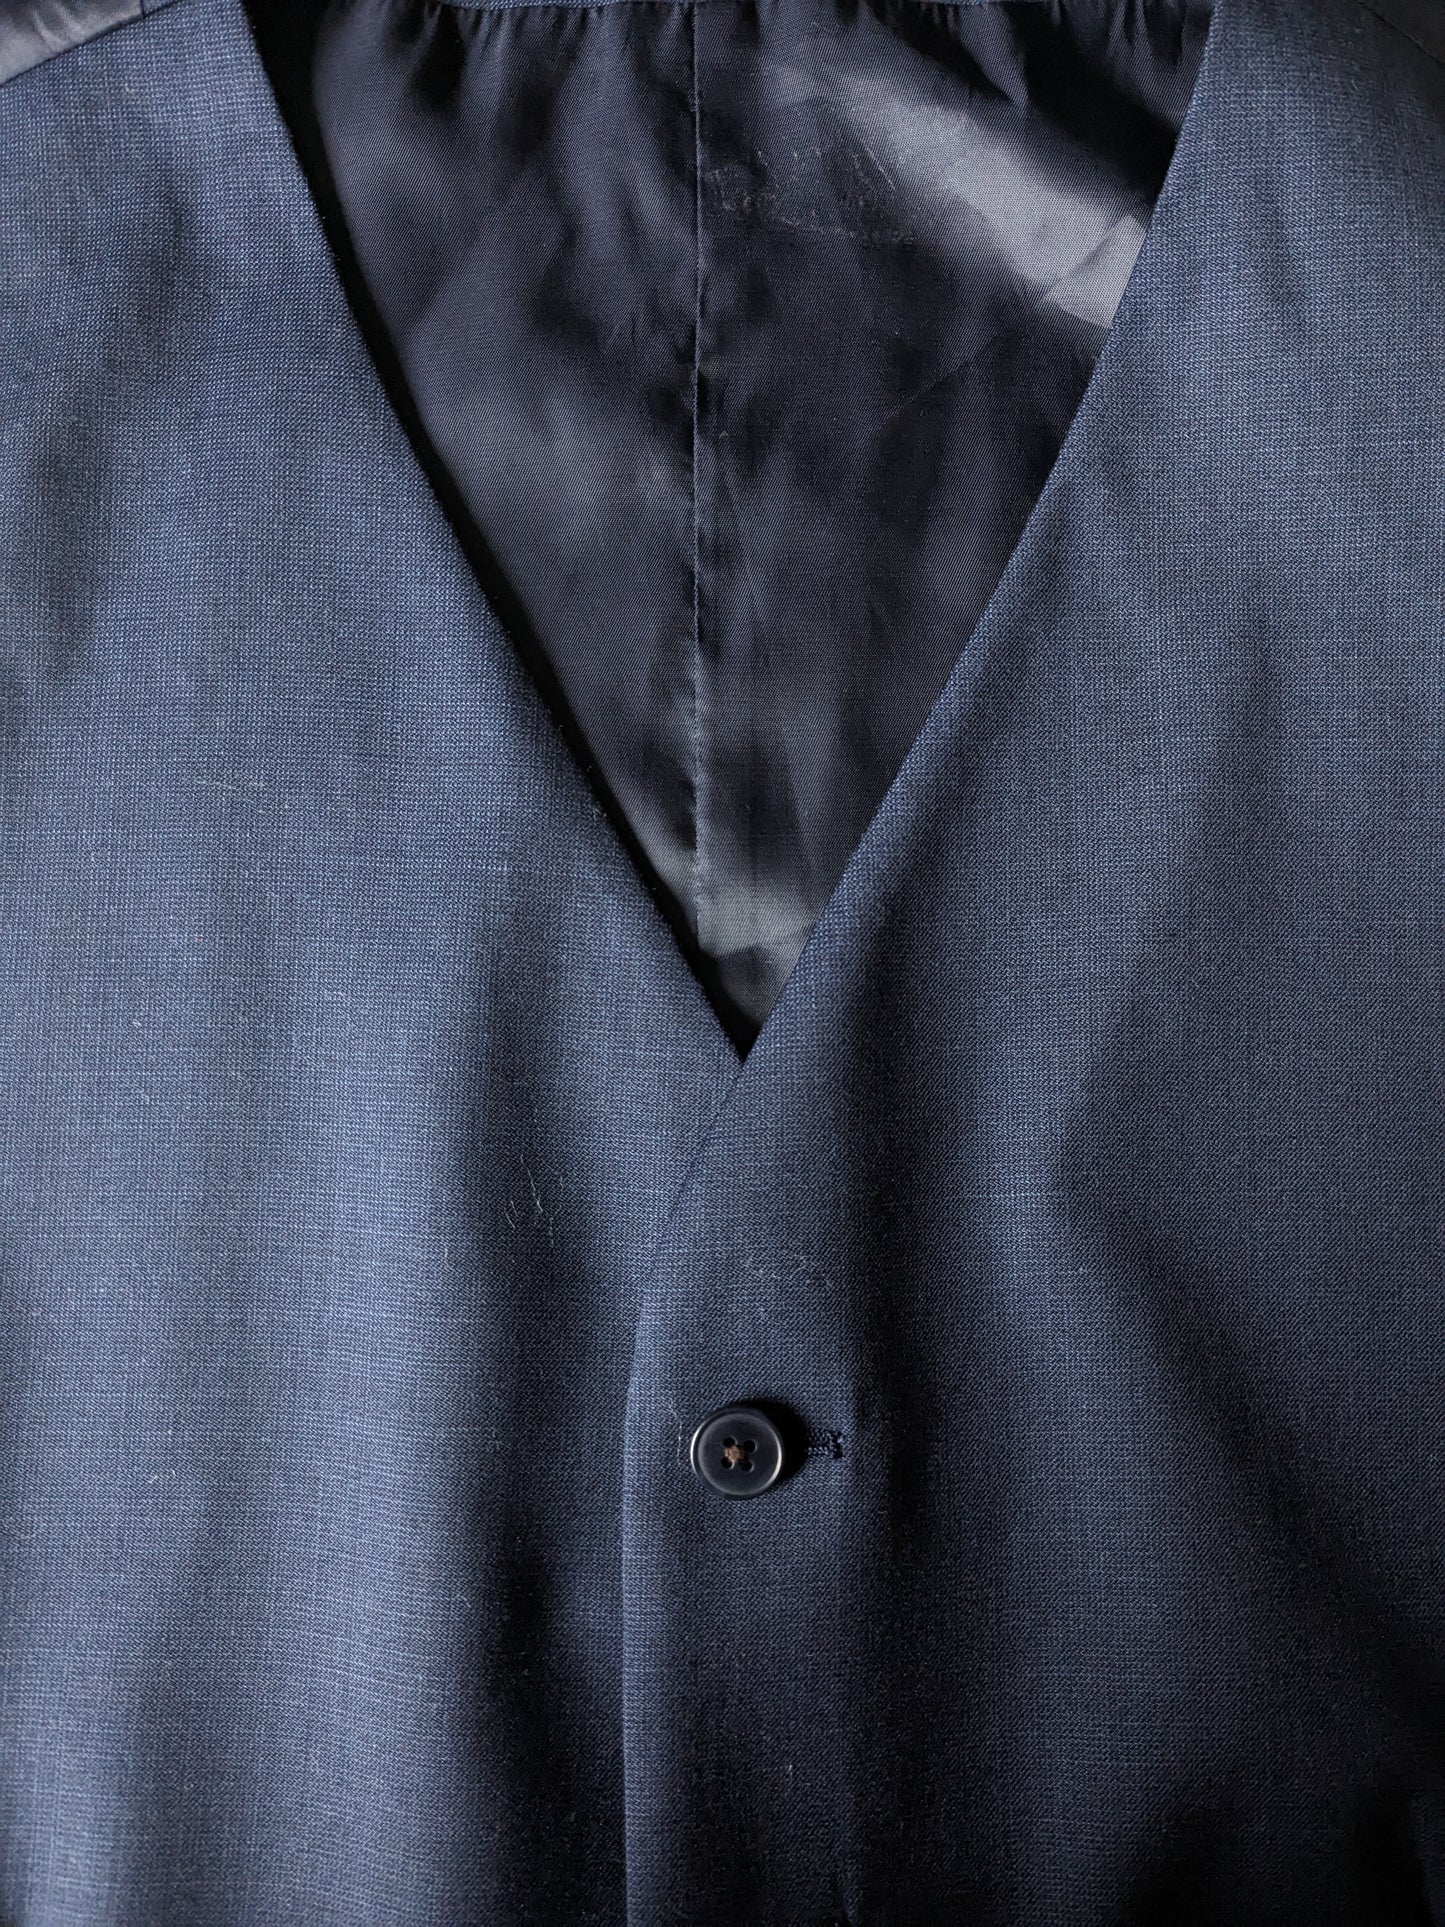 Gilet di lana di riley. Moto blu scuro. Dimensione 54 / L. 70% lana. #332